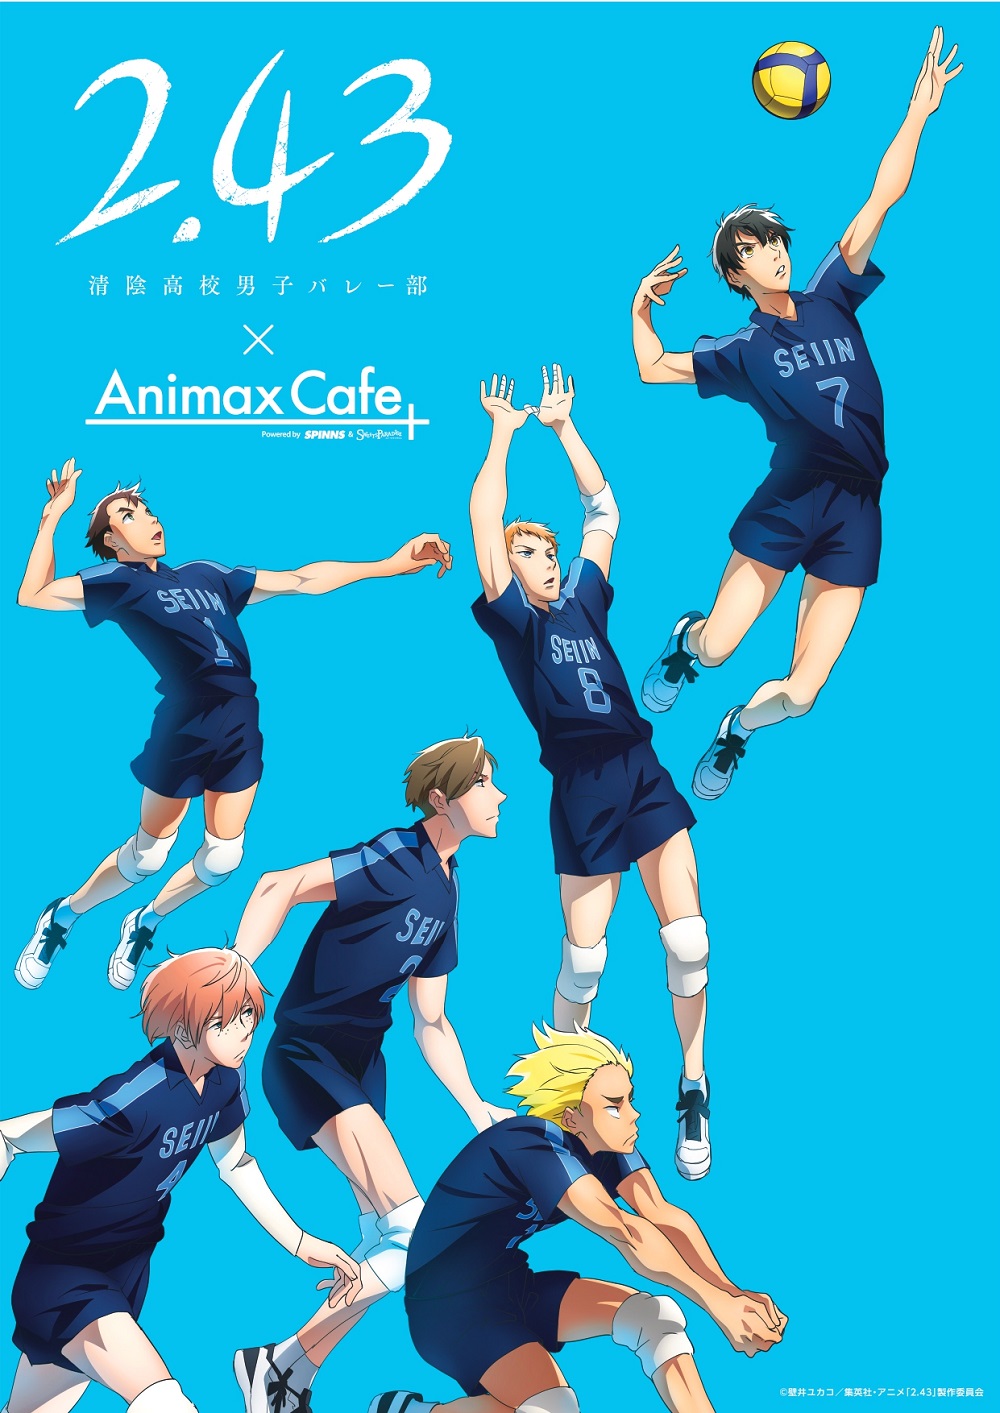 TVアニメ「2.43　清陰高校男子バレー部」×「Animax Cafe+」